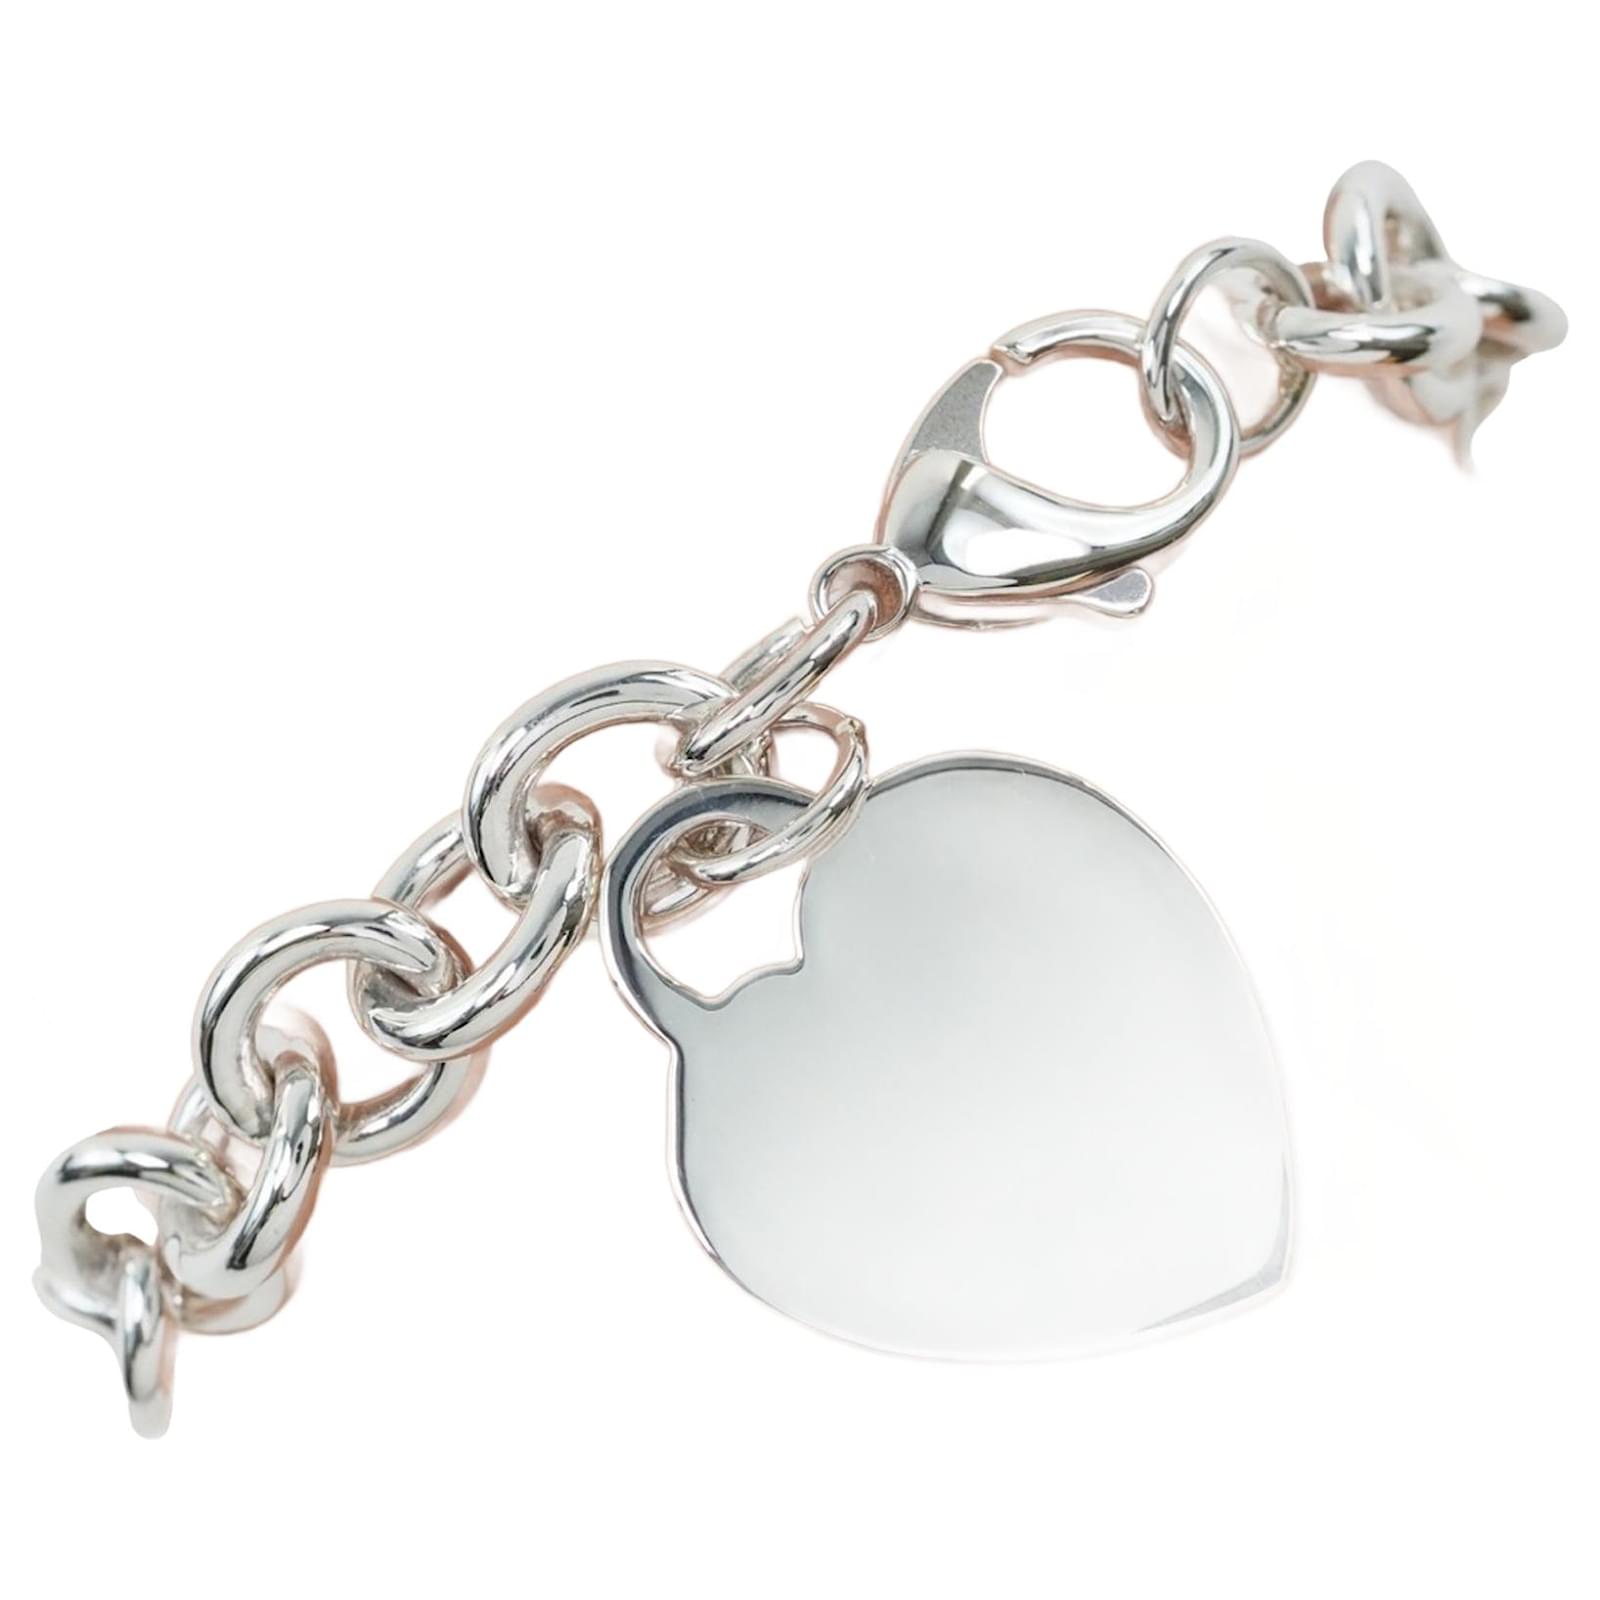 Sterling Silver Heart Tag Bracelet, 7.5